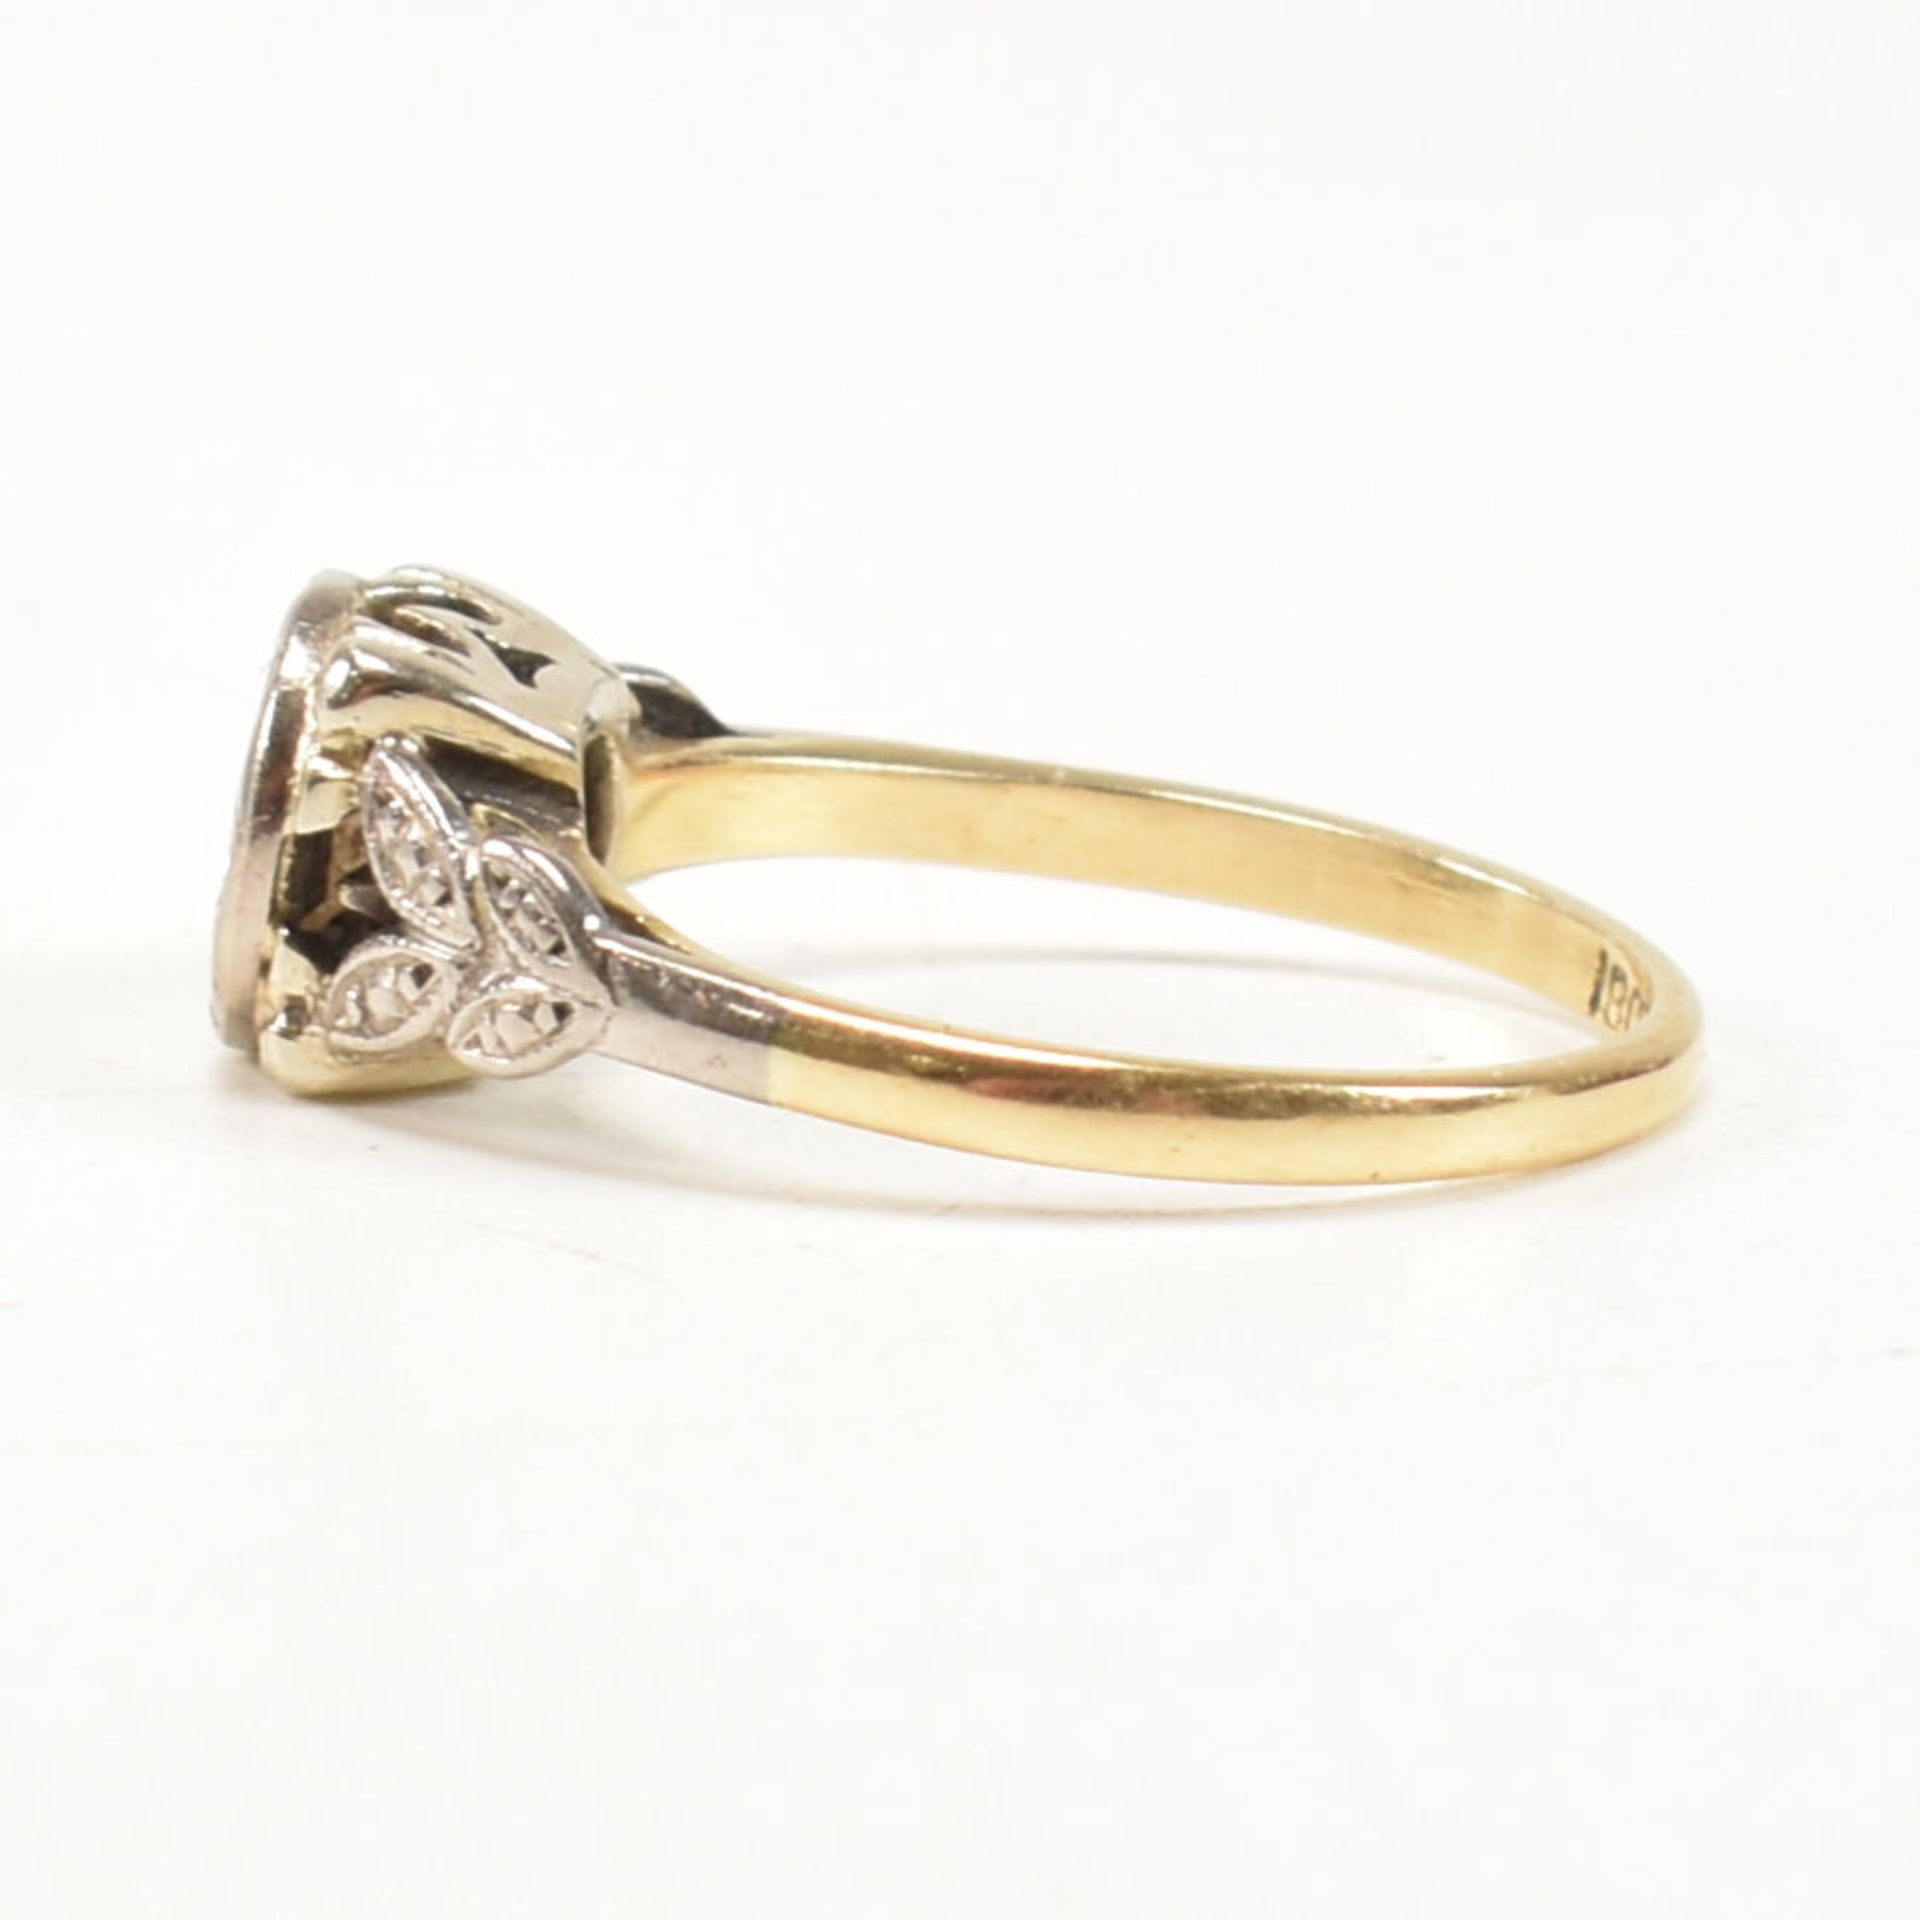 EDWARDIAN 18CT GOLD & PLATINUM DIAMOND SOLITAIRE RING - Image 3 of 8